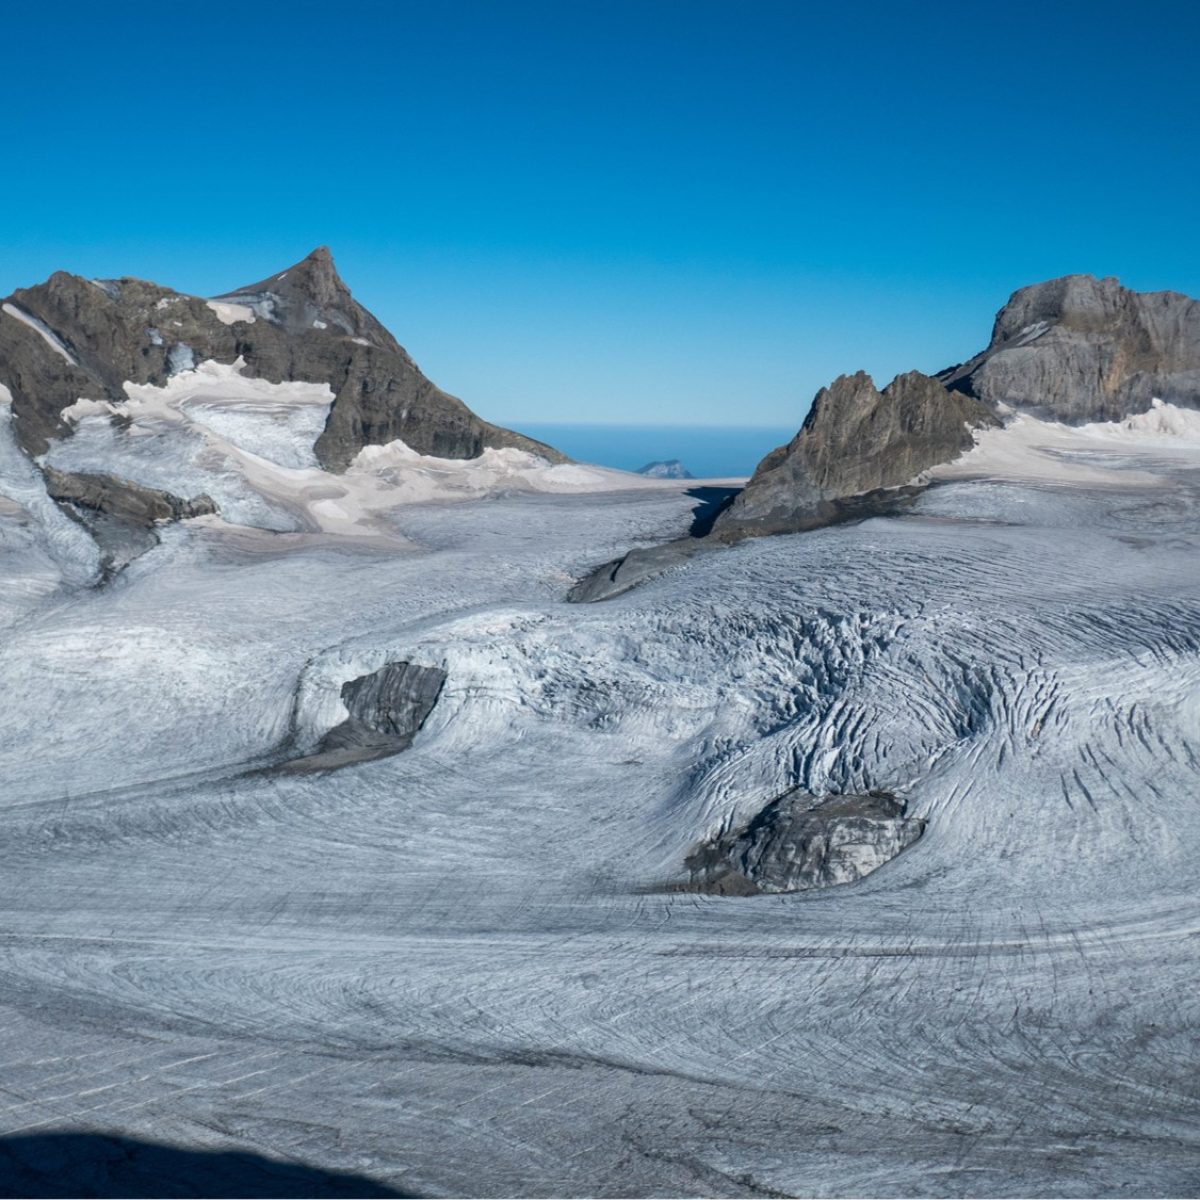 Gletsjer in disbalans: grotere smelt- (grijs) dan accumulatiezone (wit). Hüfifirn, Zwitserland.